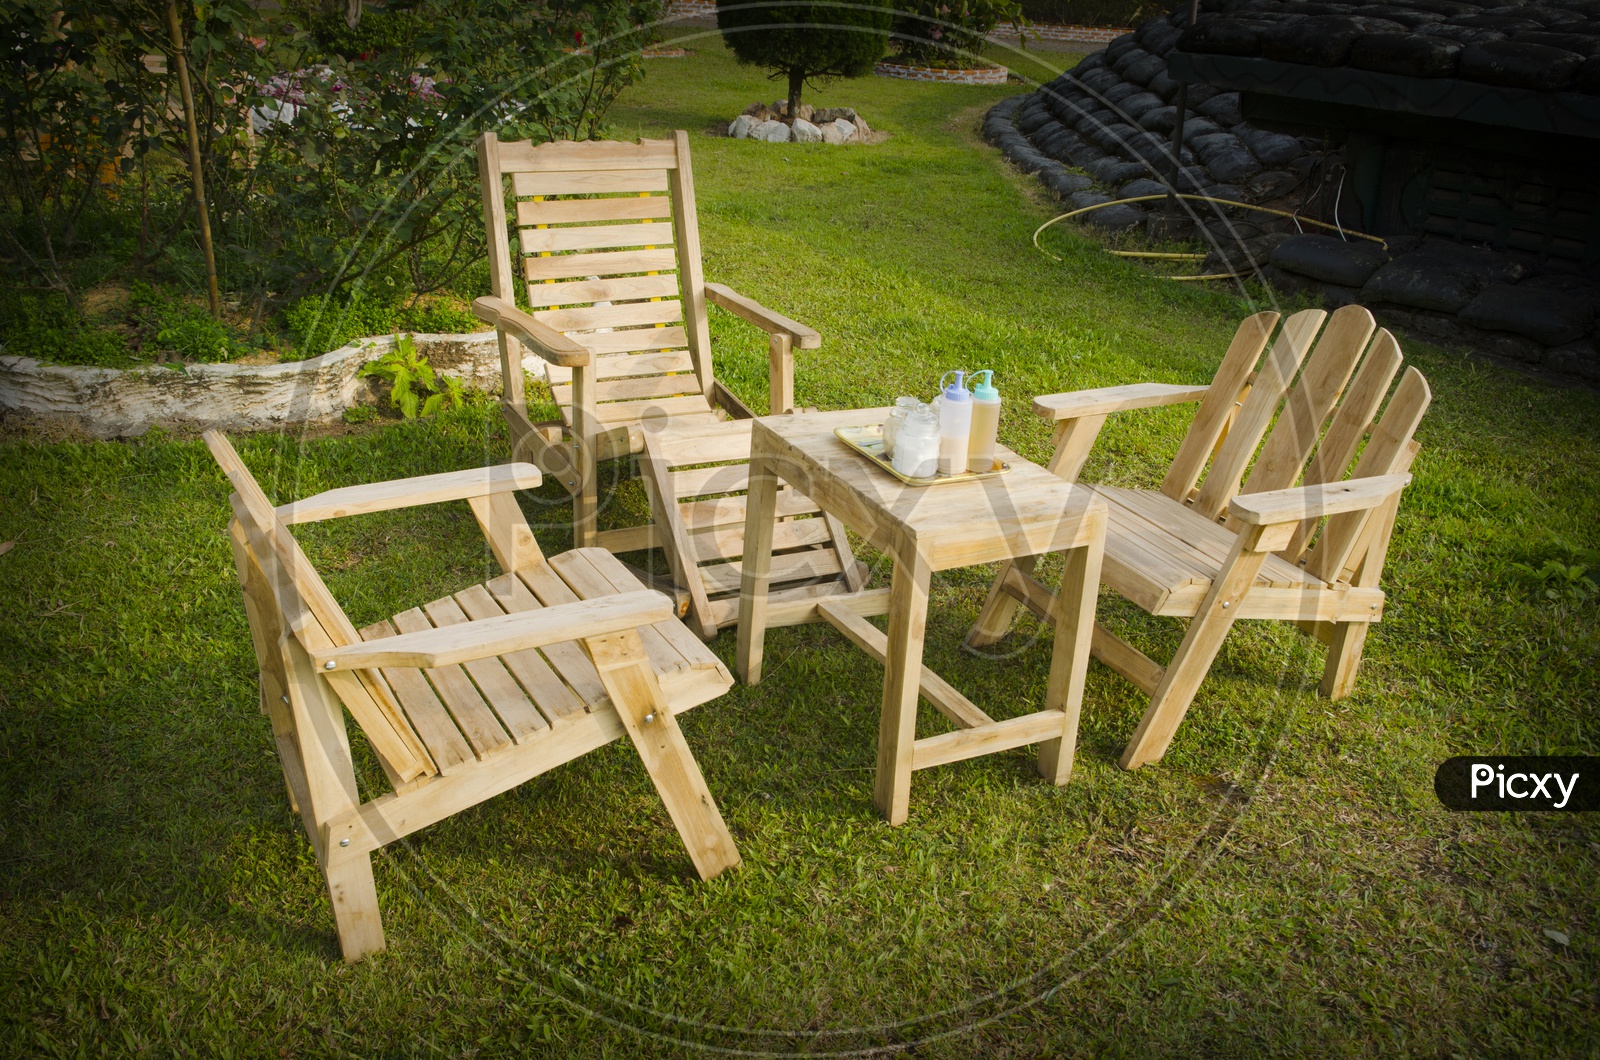 Wooden Chairs in a Garden